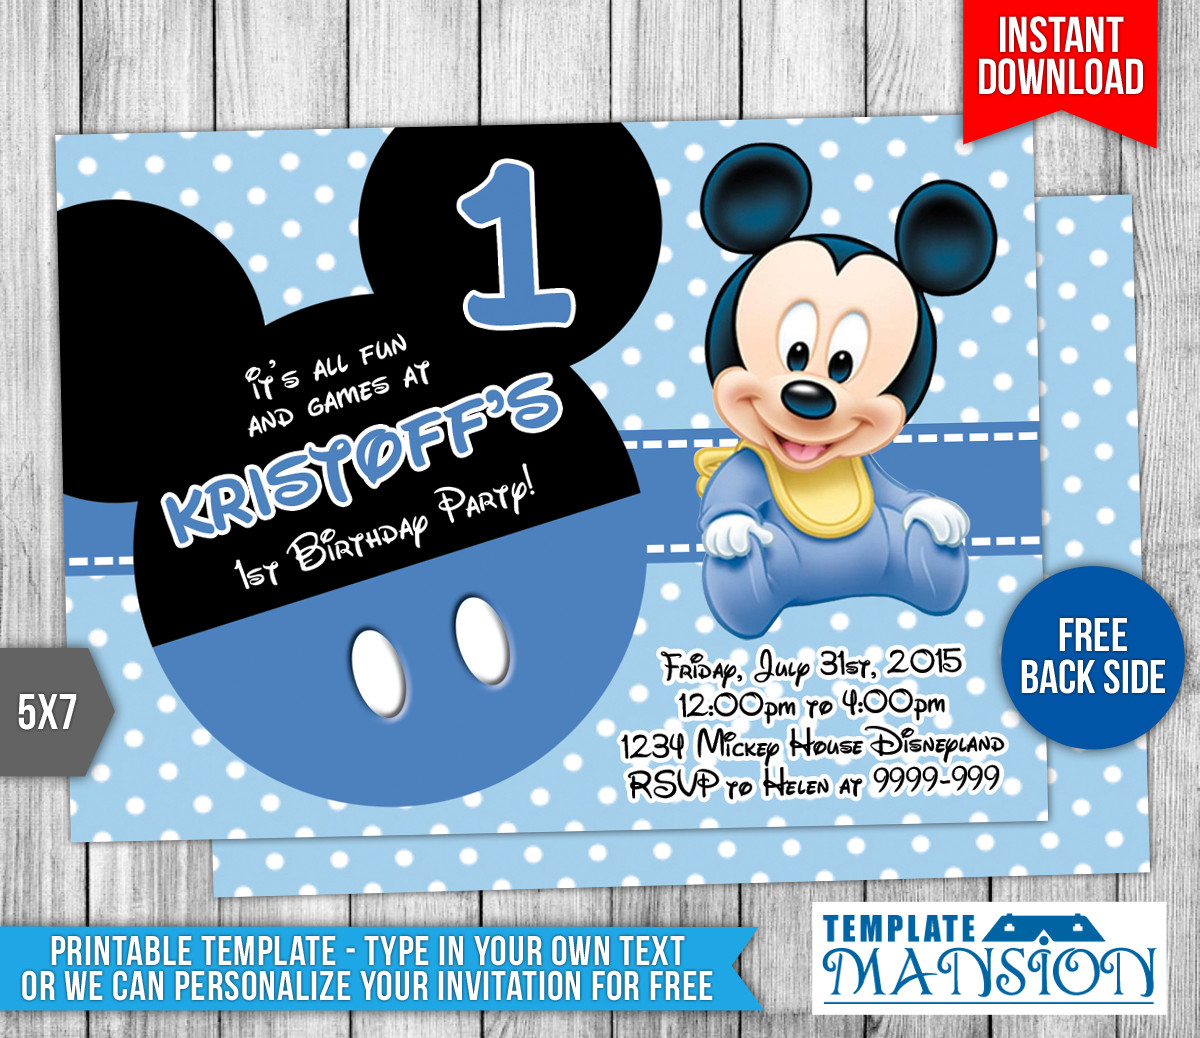 Baby Mickey Mouse 1st Birthday Invitations
 Baby Mickey Mouse Birthday Invitation by templatemansion